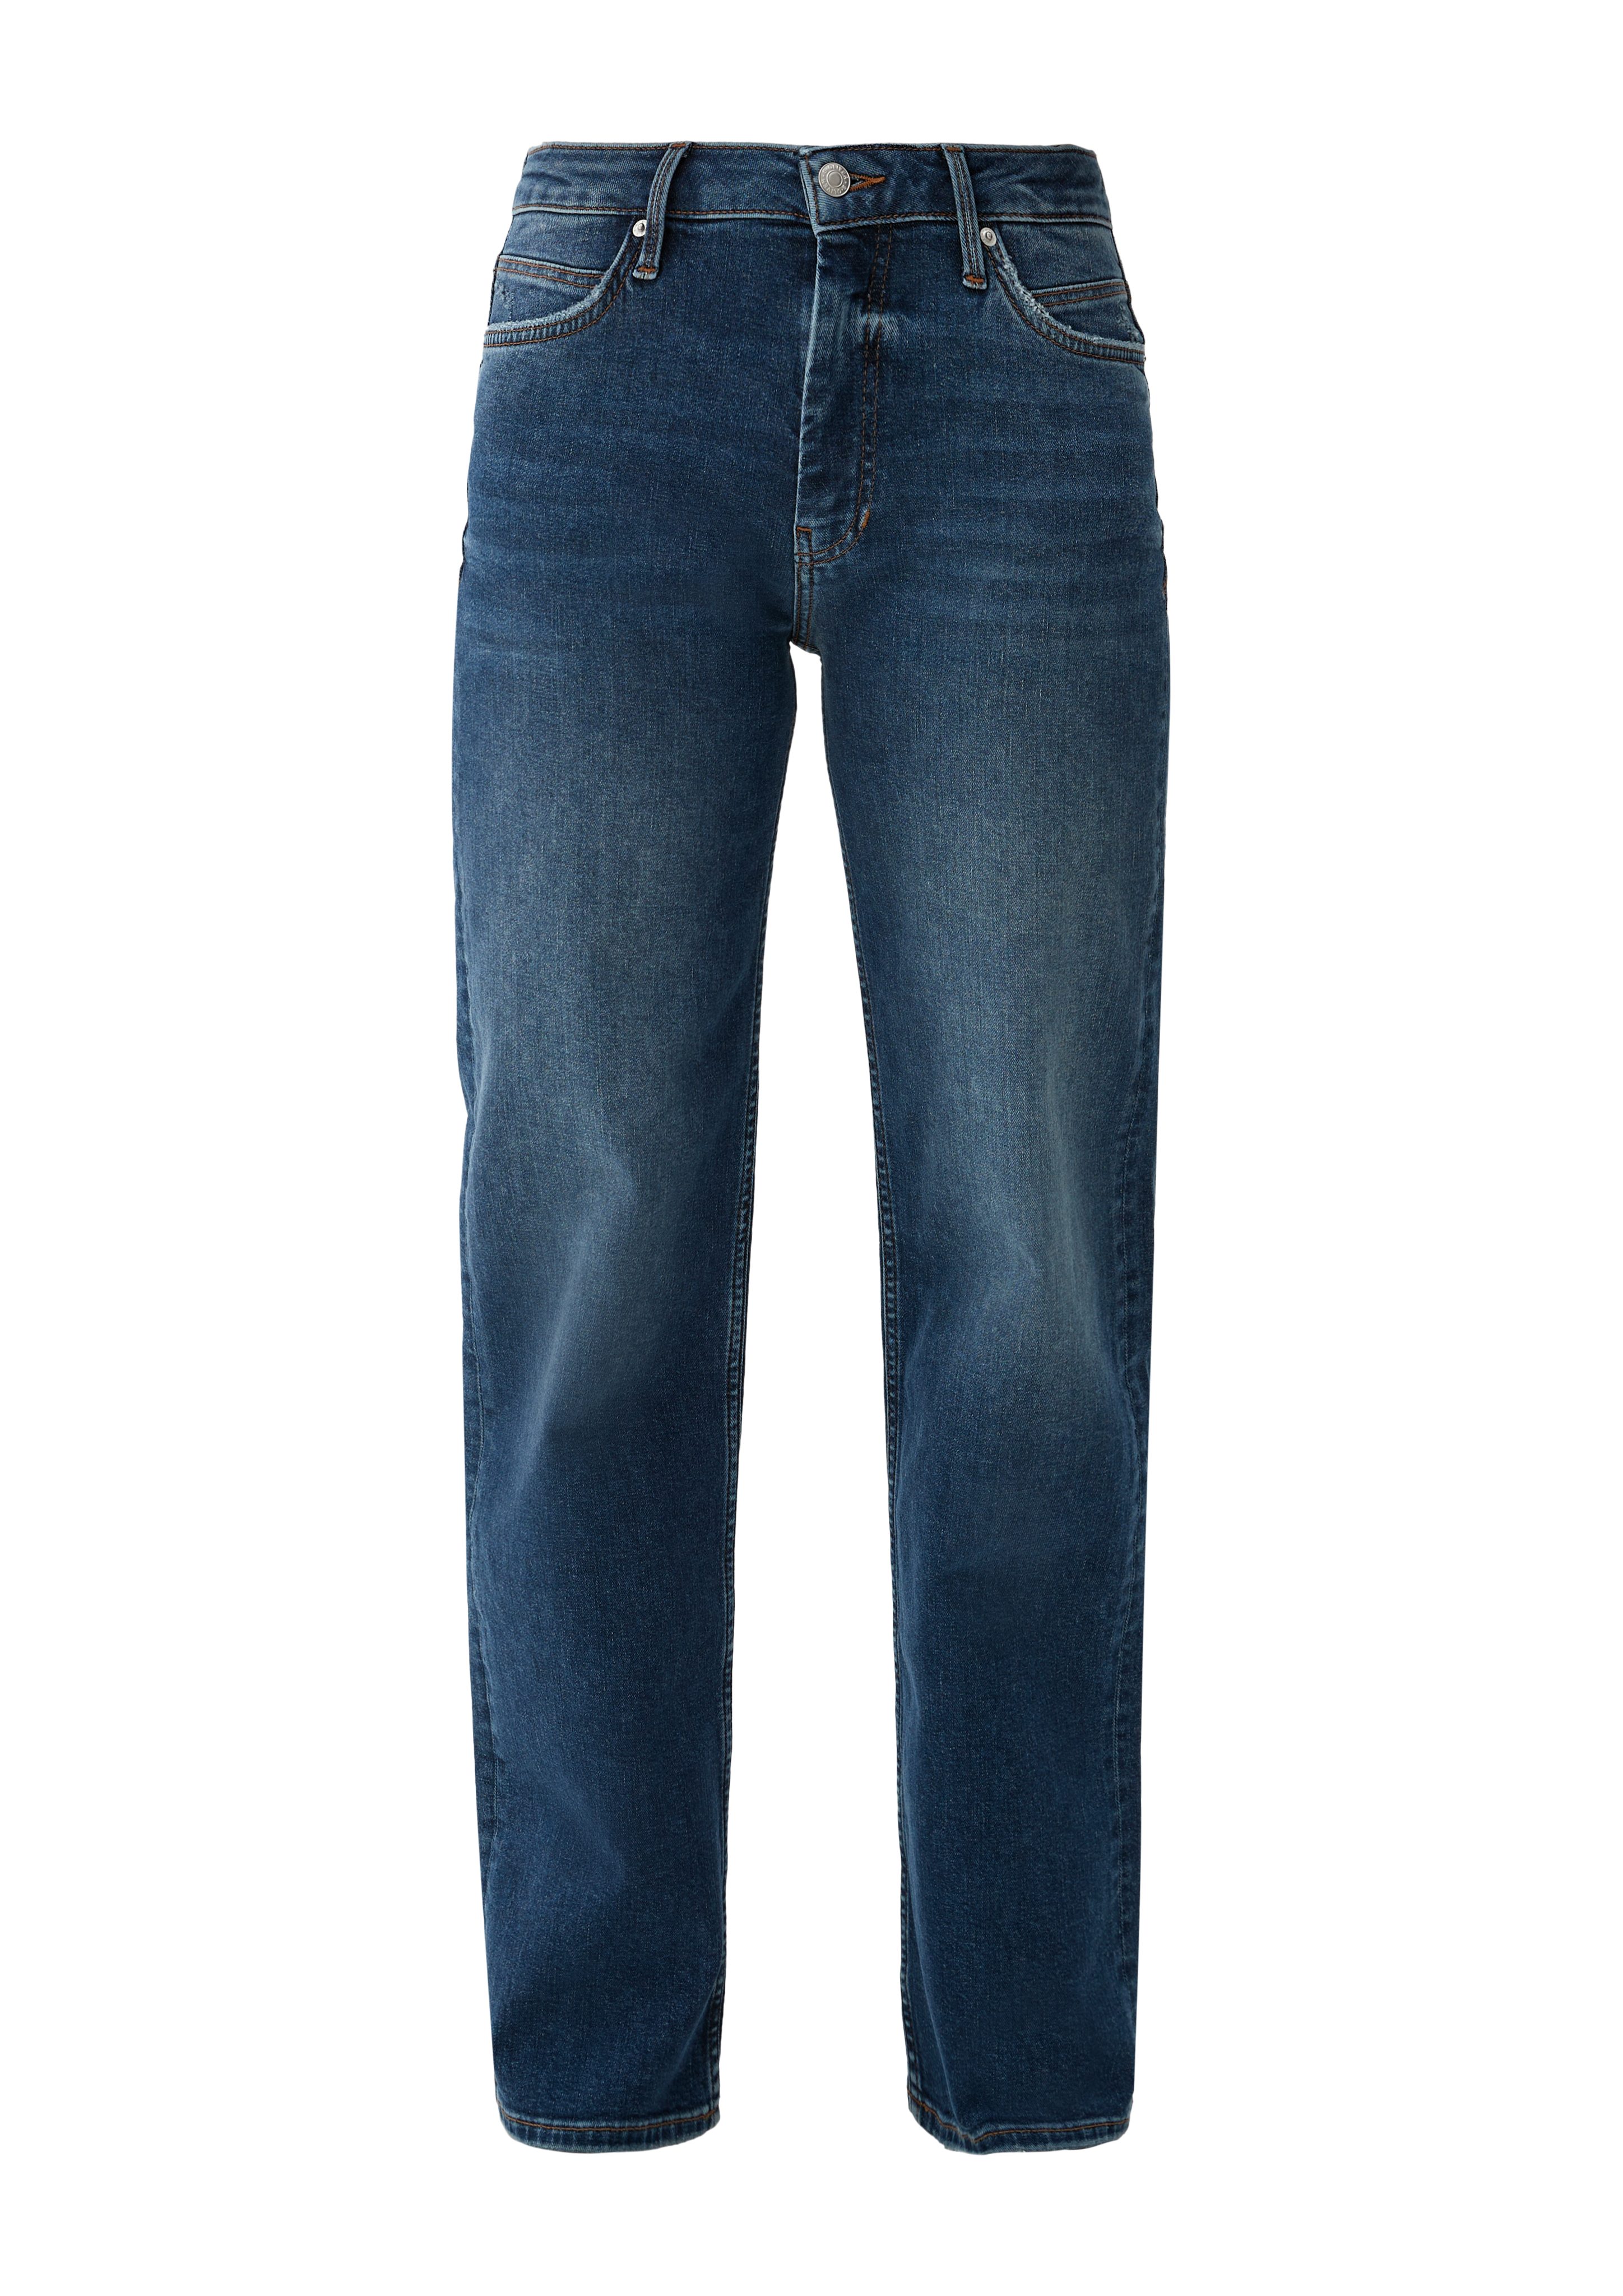 s.Oliver 5-Pocket-Jeans Regular: Jeans leg Waschung Straight blau mit